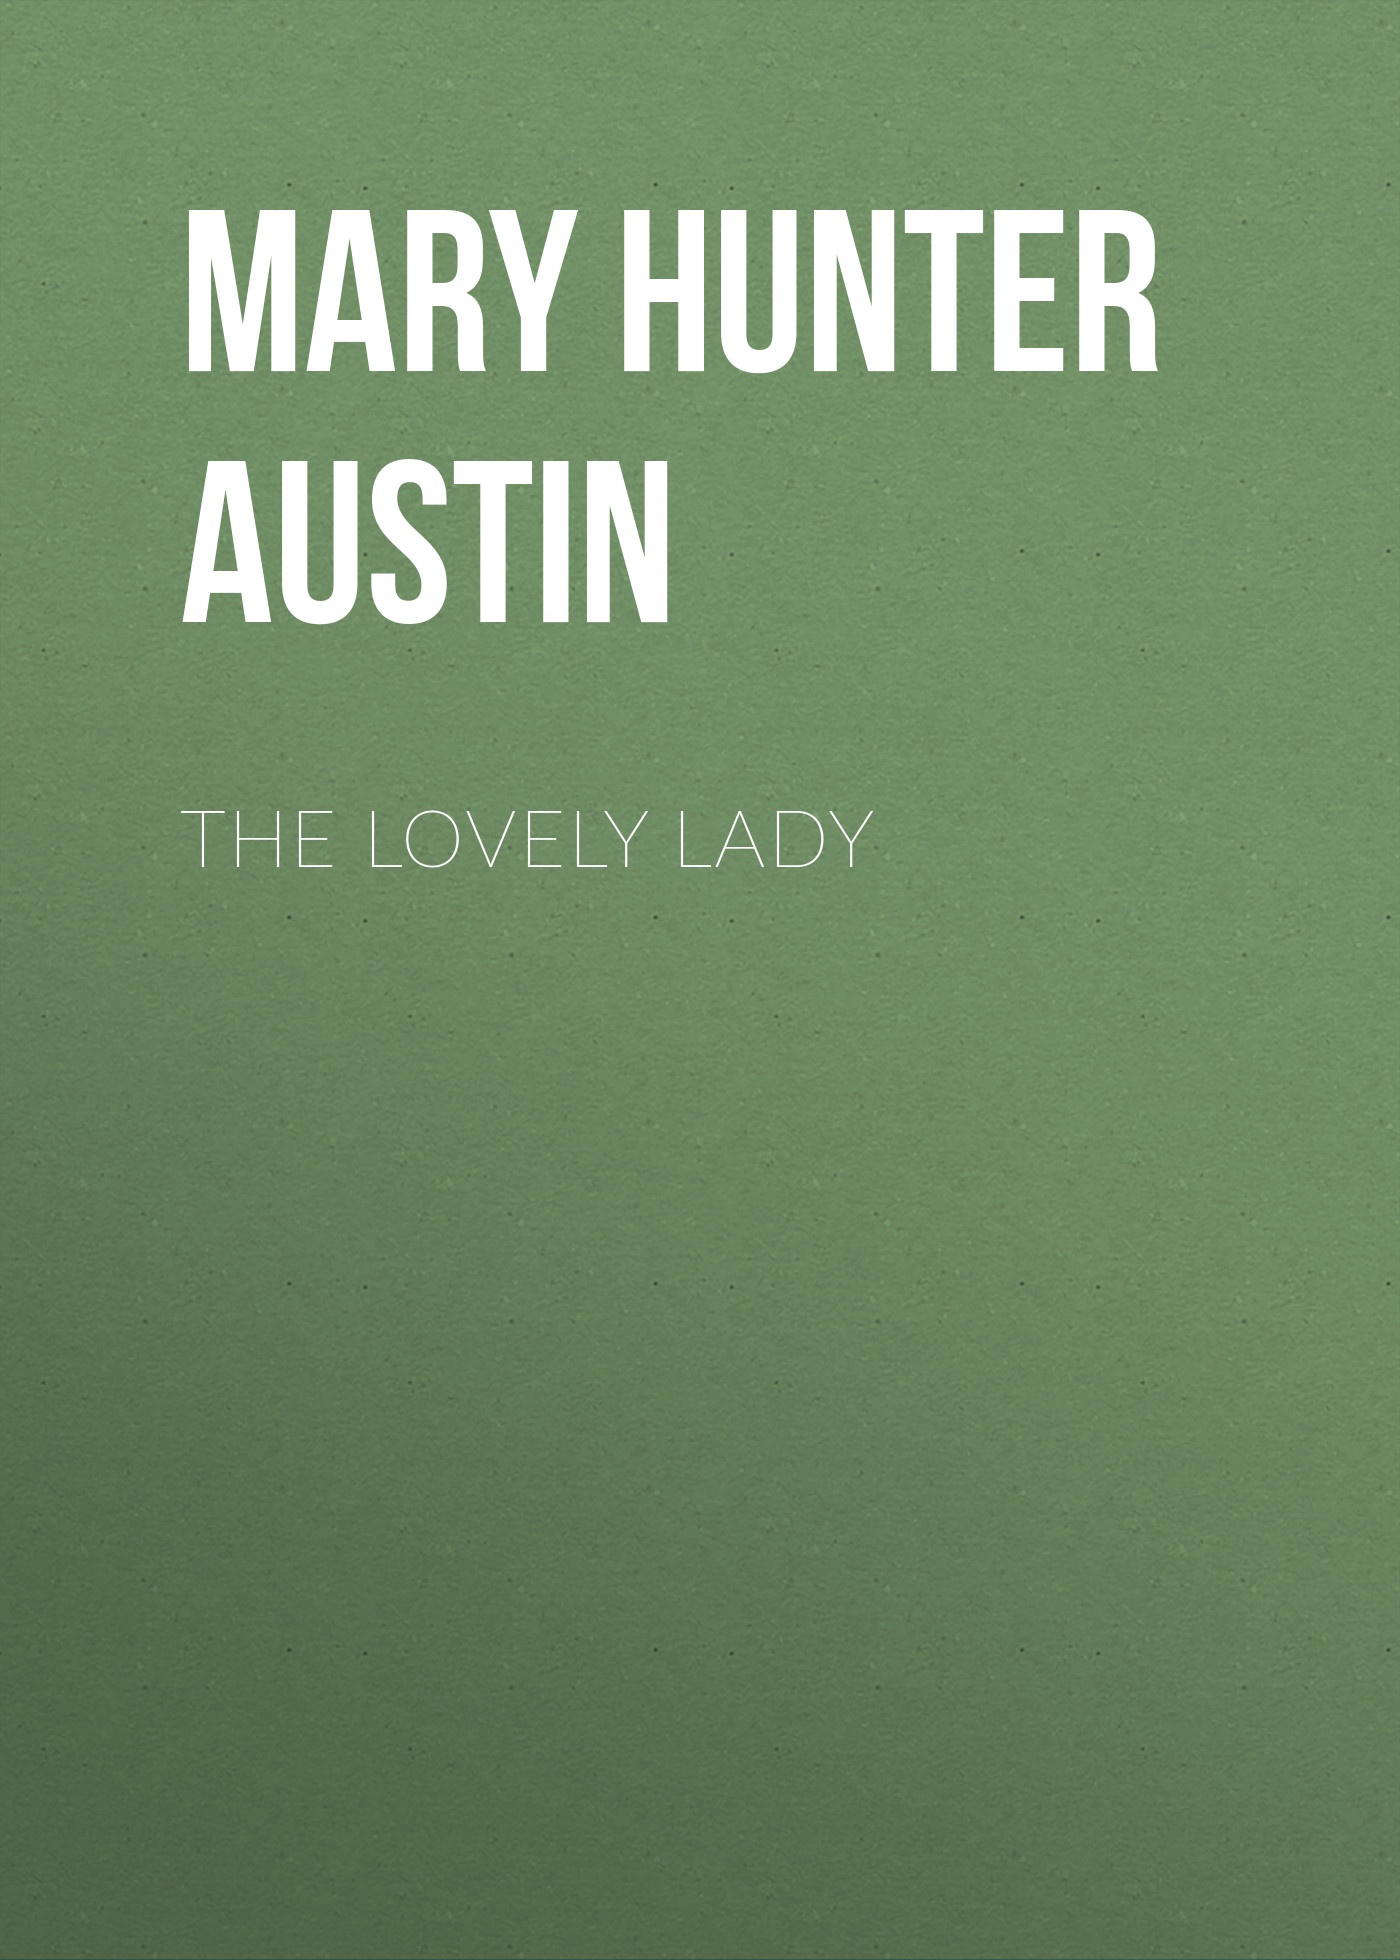 Mary Hunter Austin The Lovely Lady